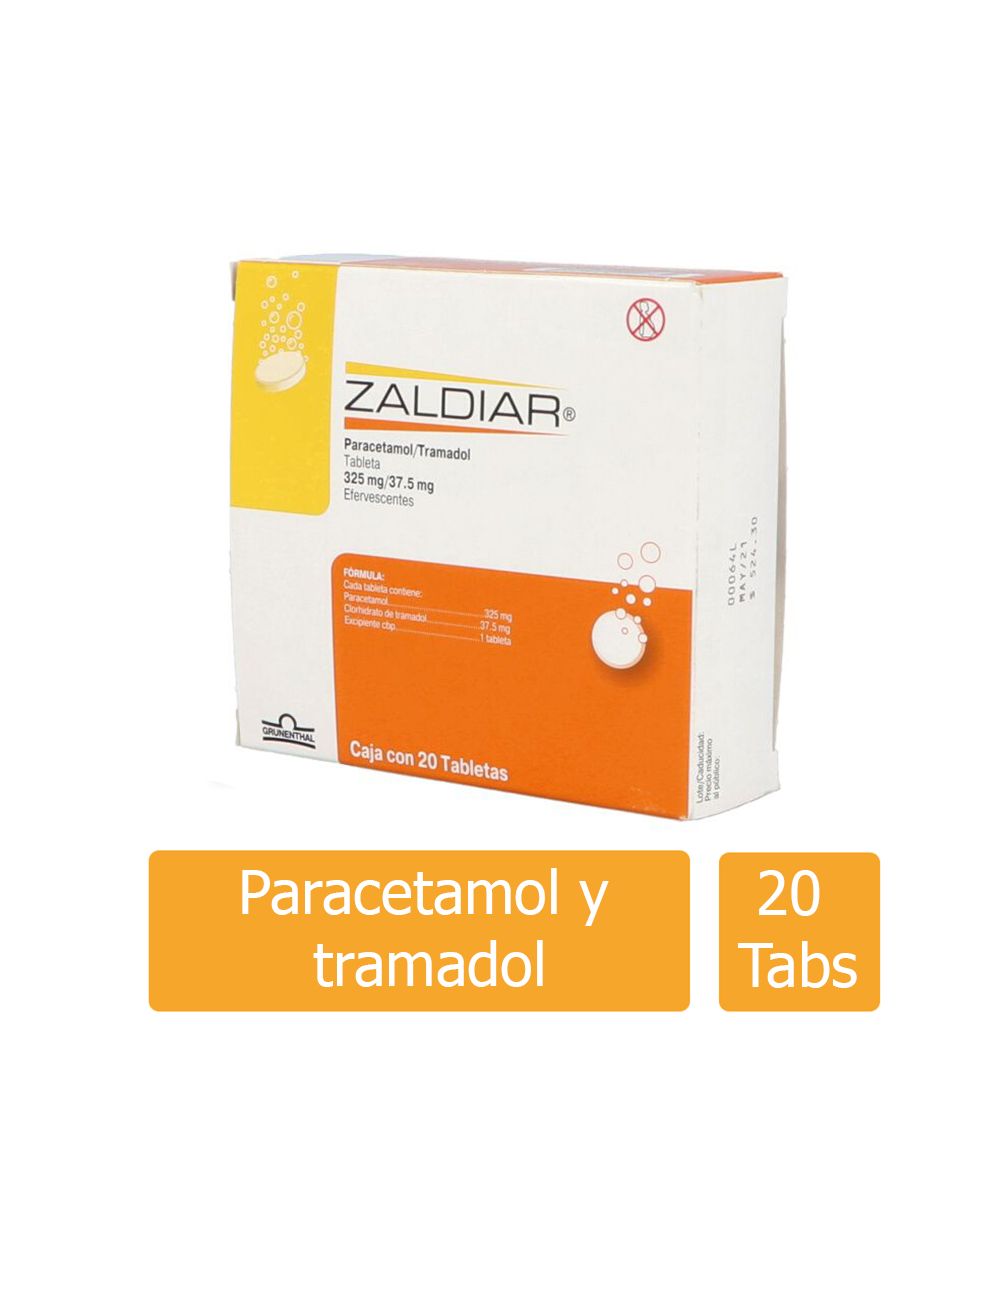 Zaldiar 325 mg /37.5 mg Caja Con 20 Tabletas